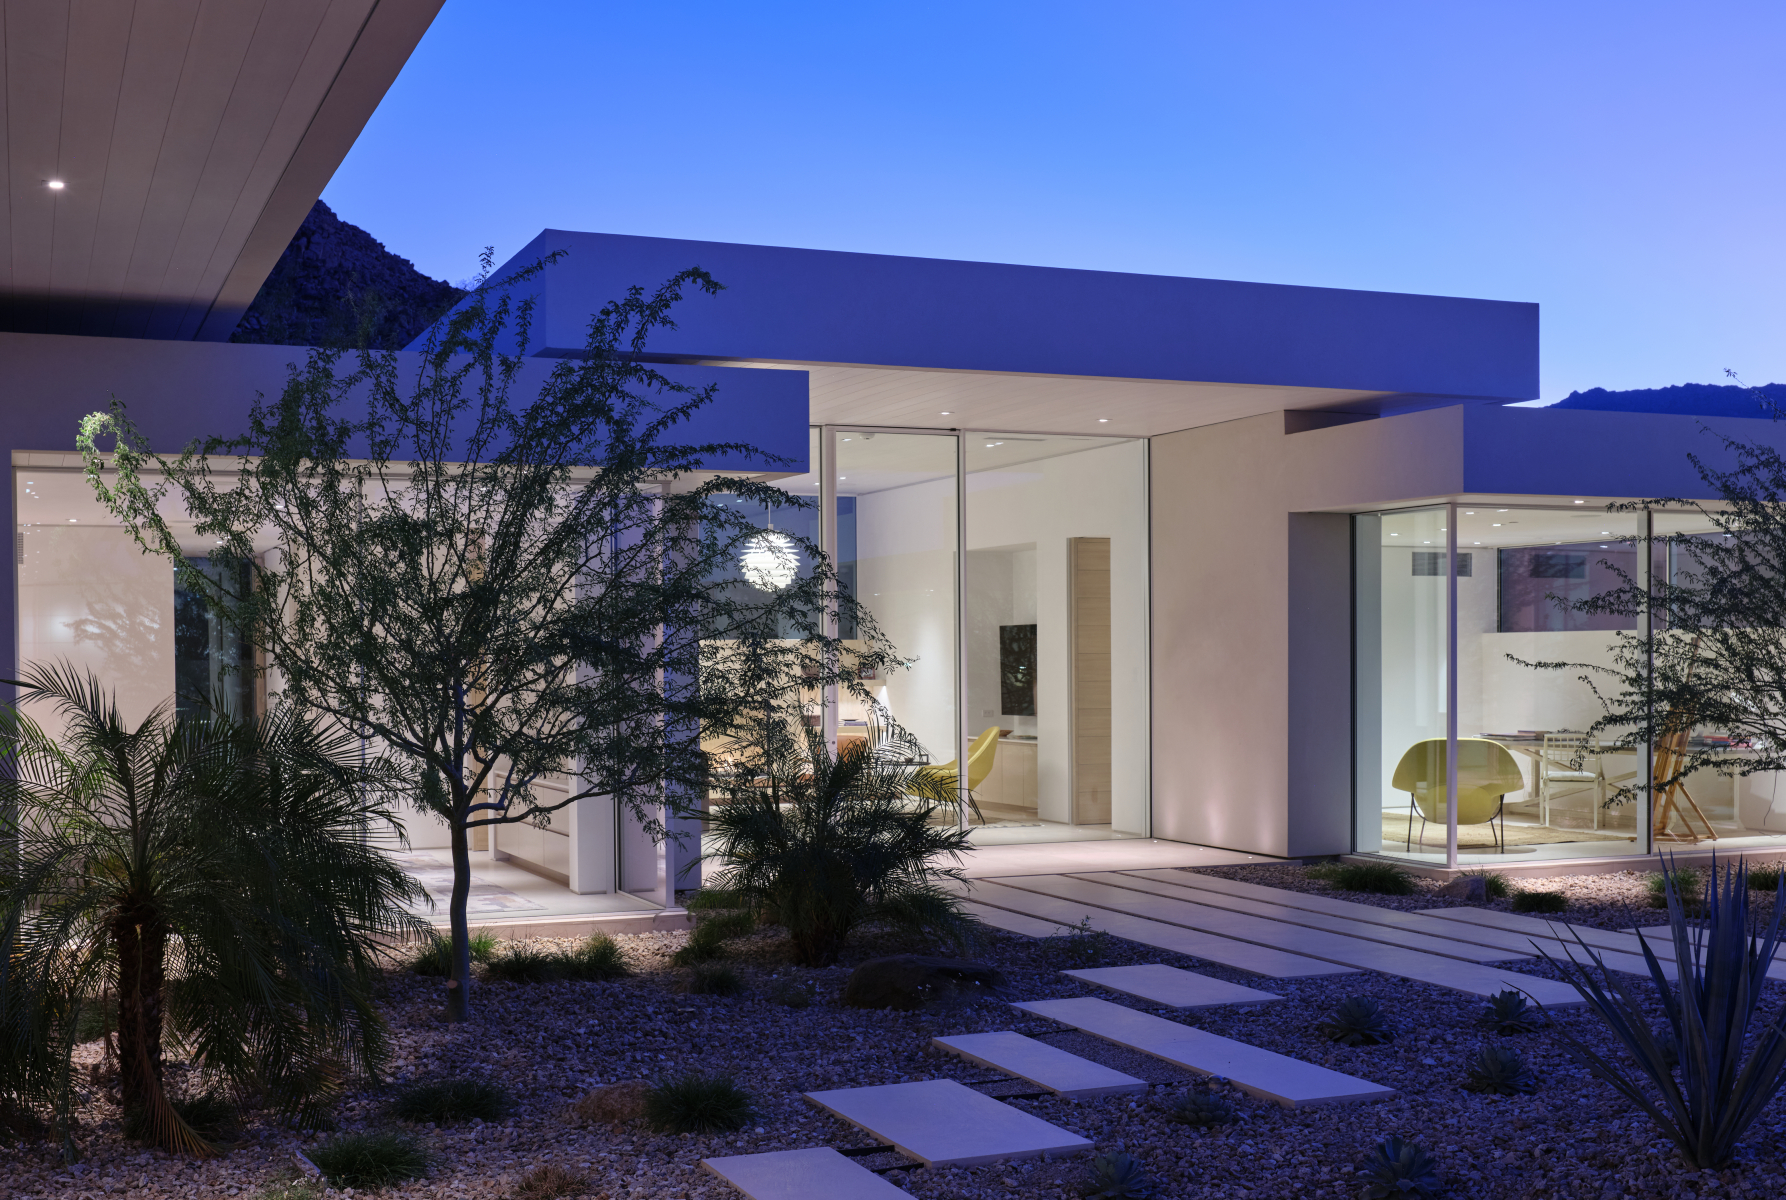 Kroeger Janev Architects, Nicole Hollis Interiors, Indian Wells, CA